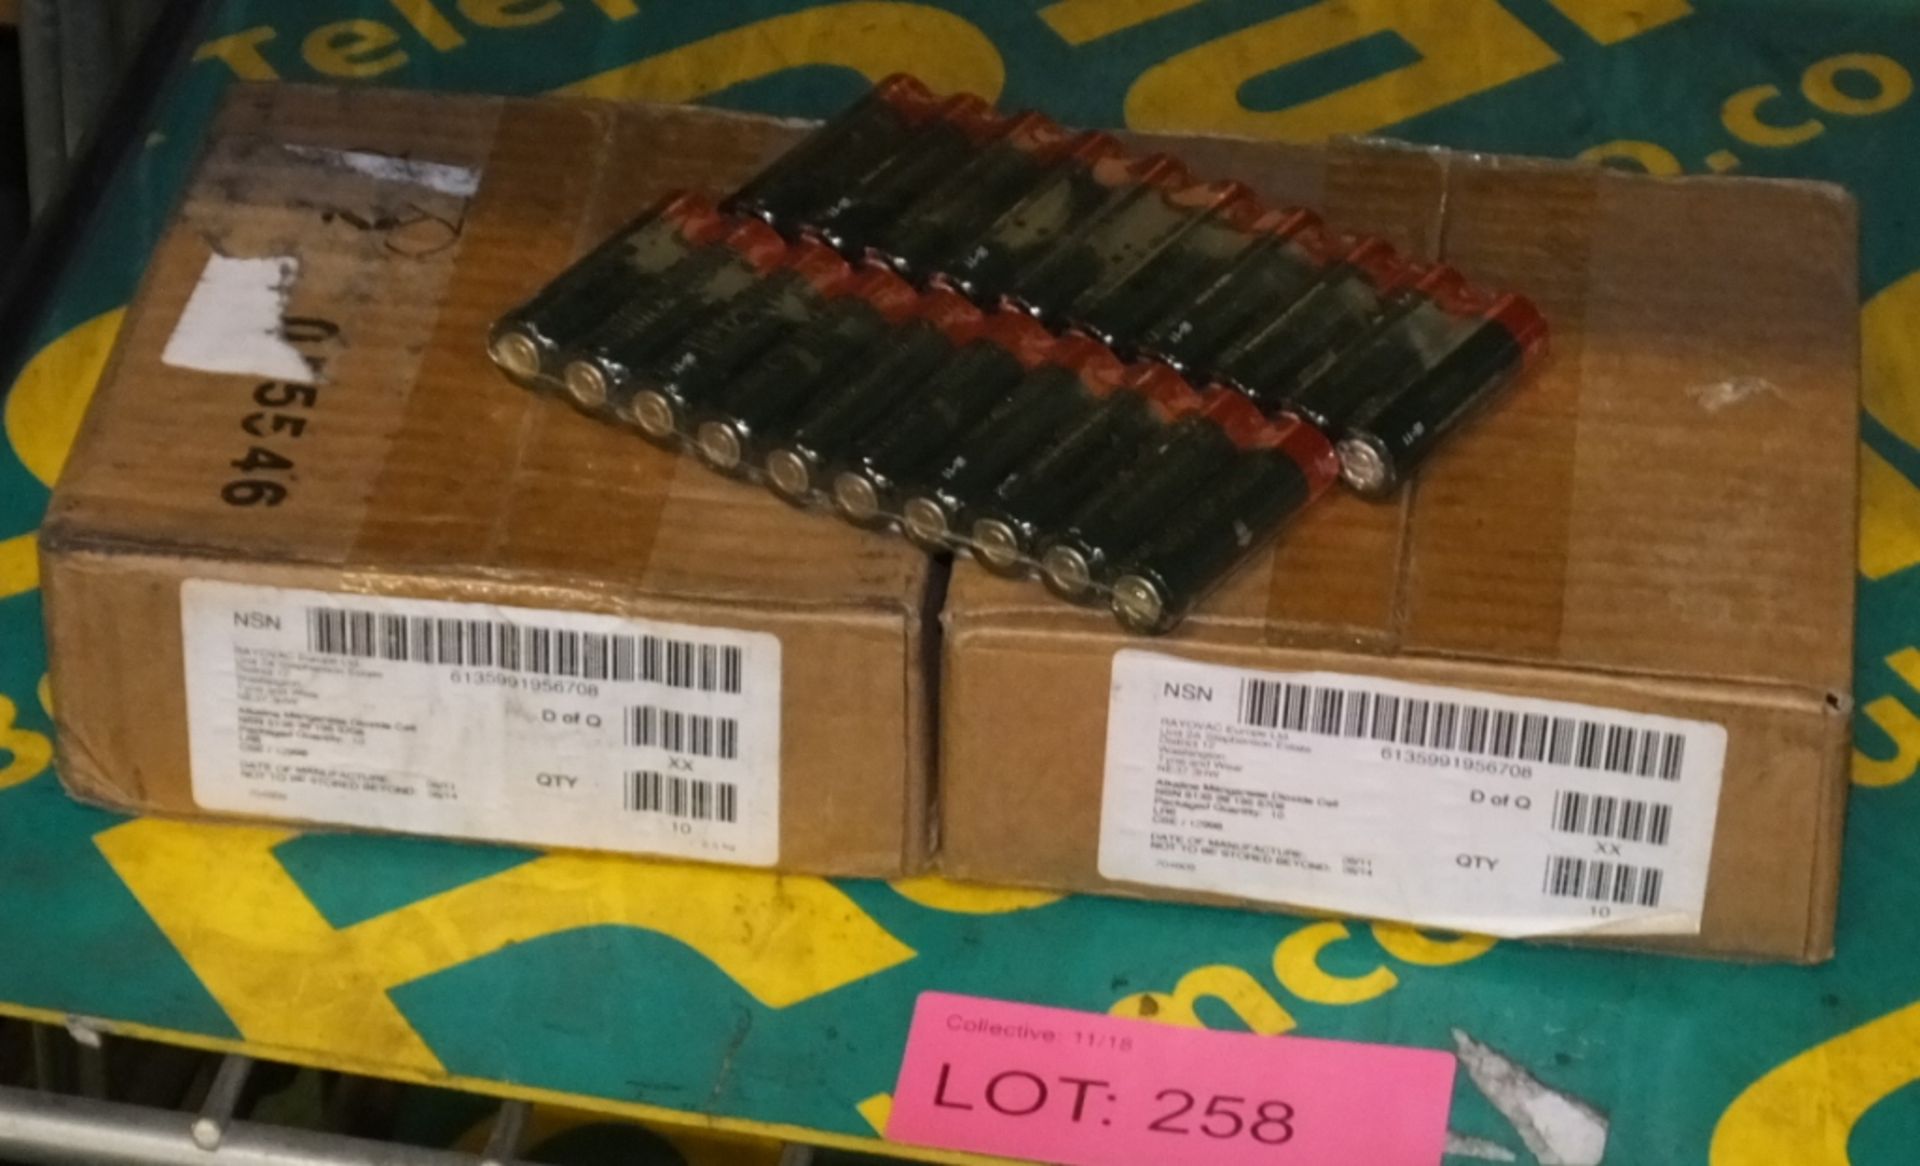 AA Batteries - 100 per box - 2 boxes